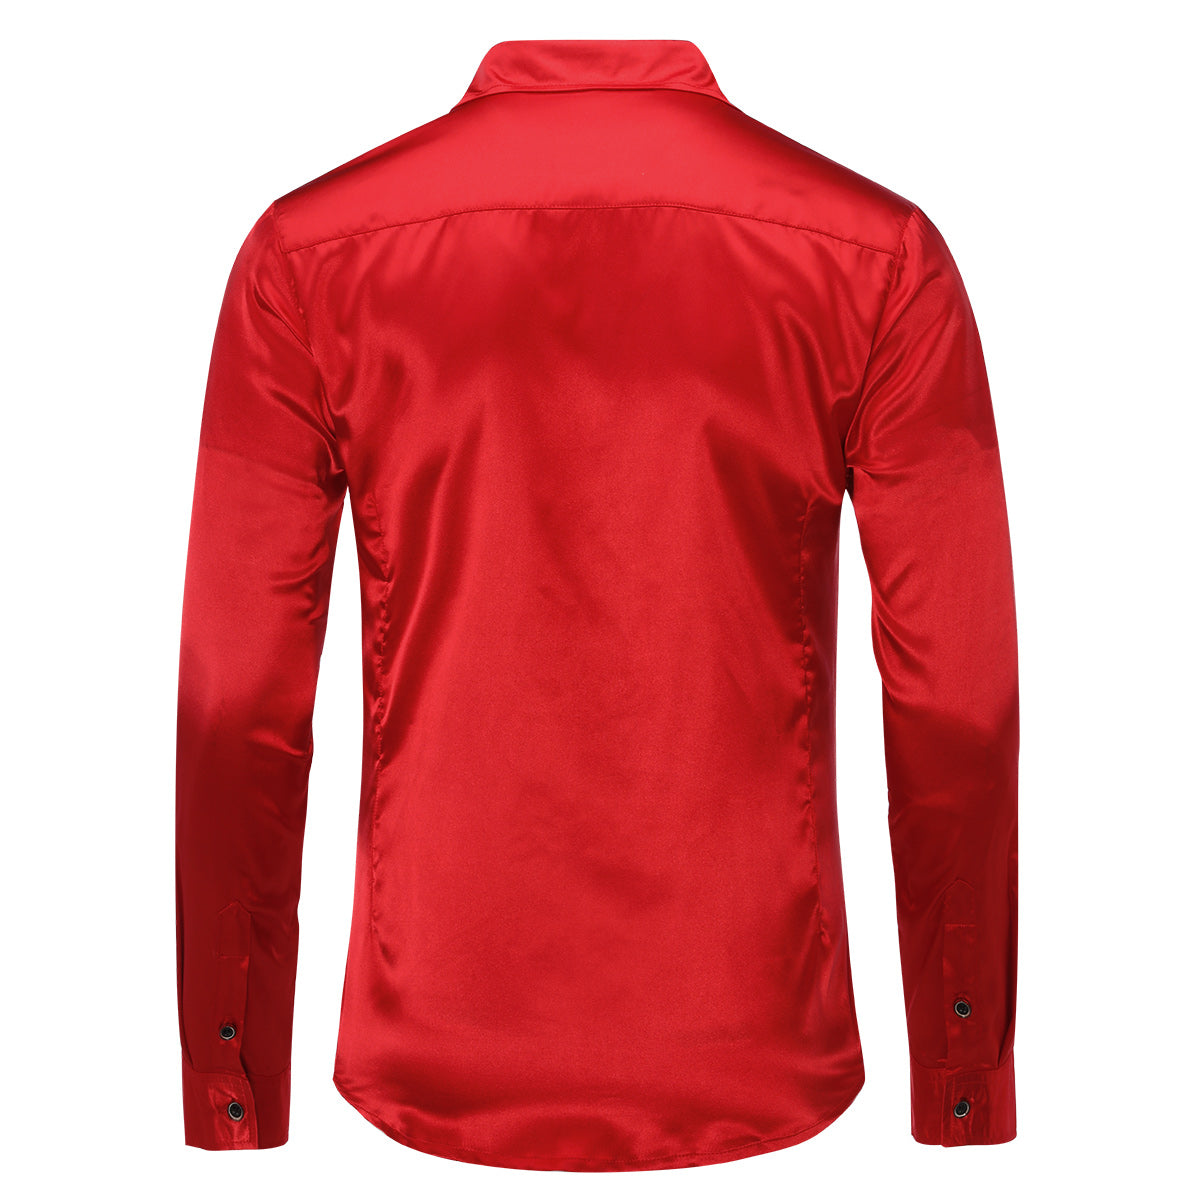 Men's Casual Fashion Shiny Long Sleeve Lapel Shirt Red